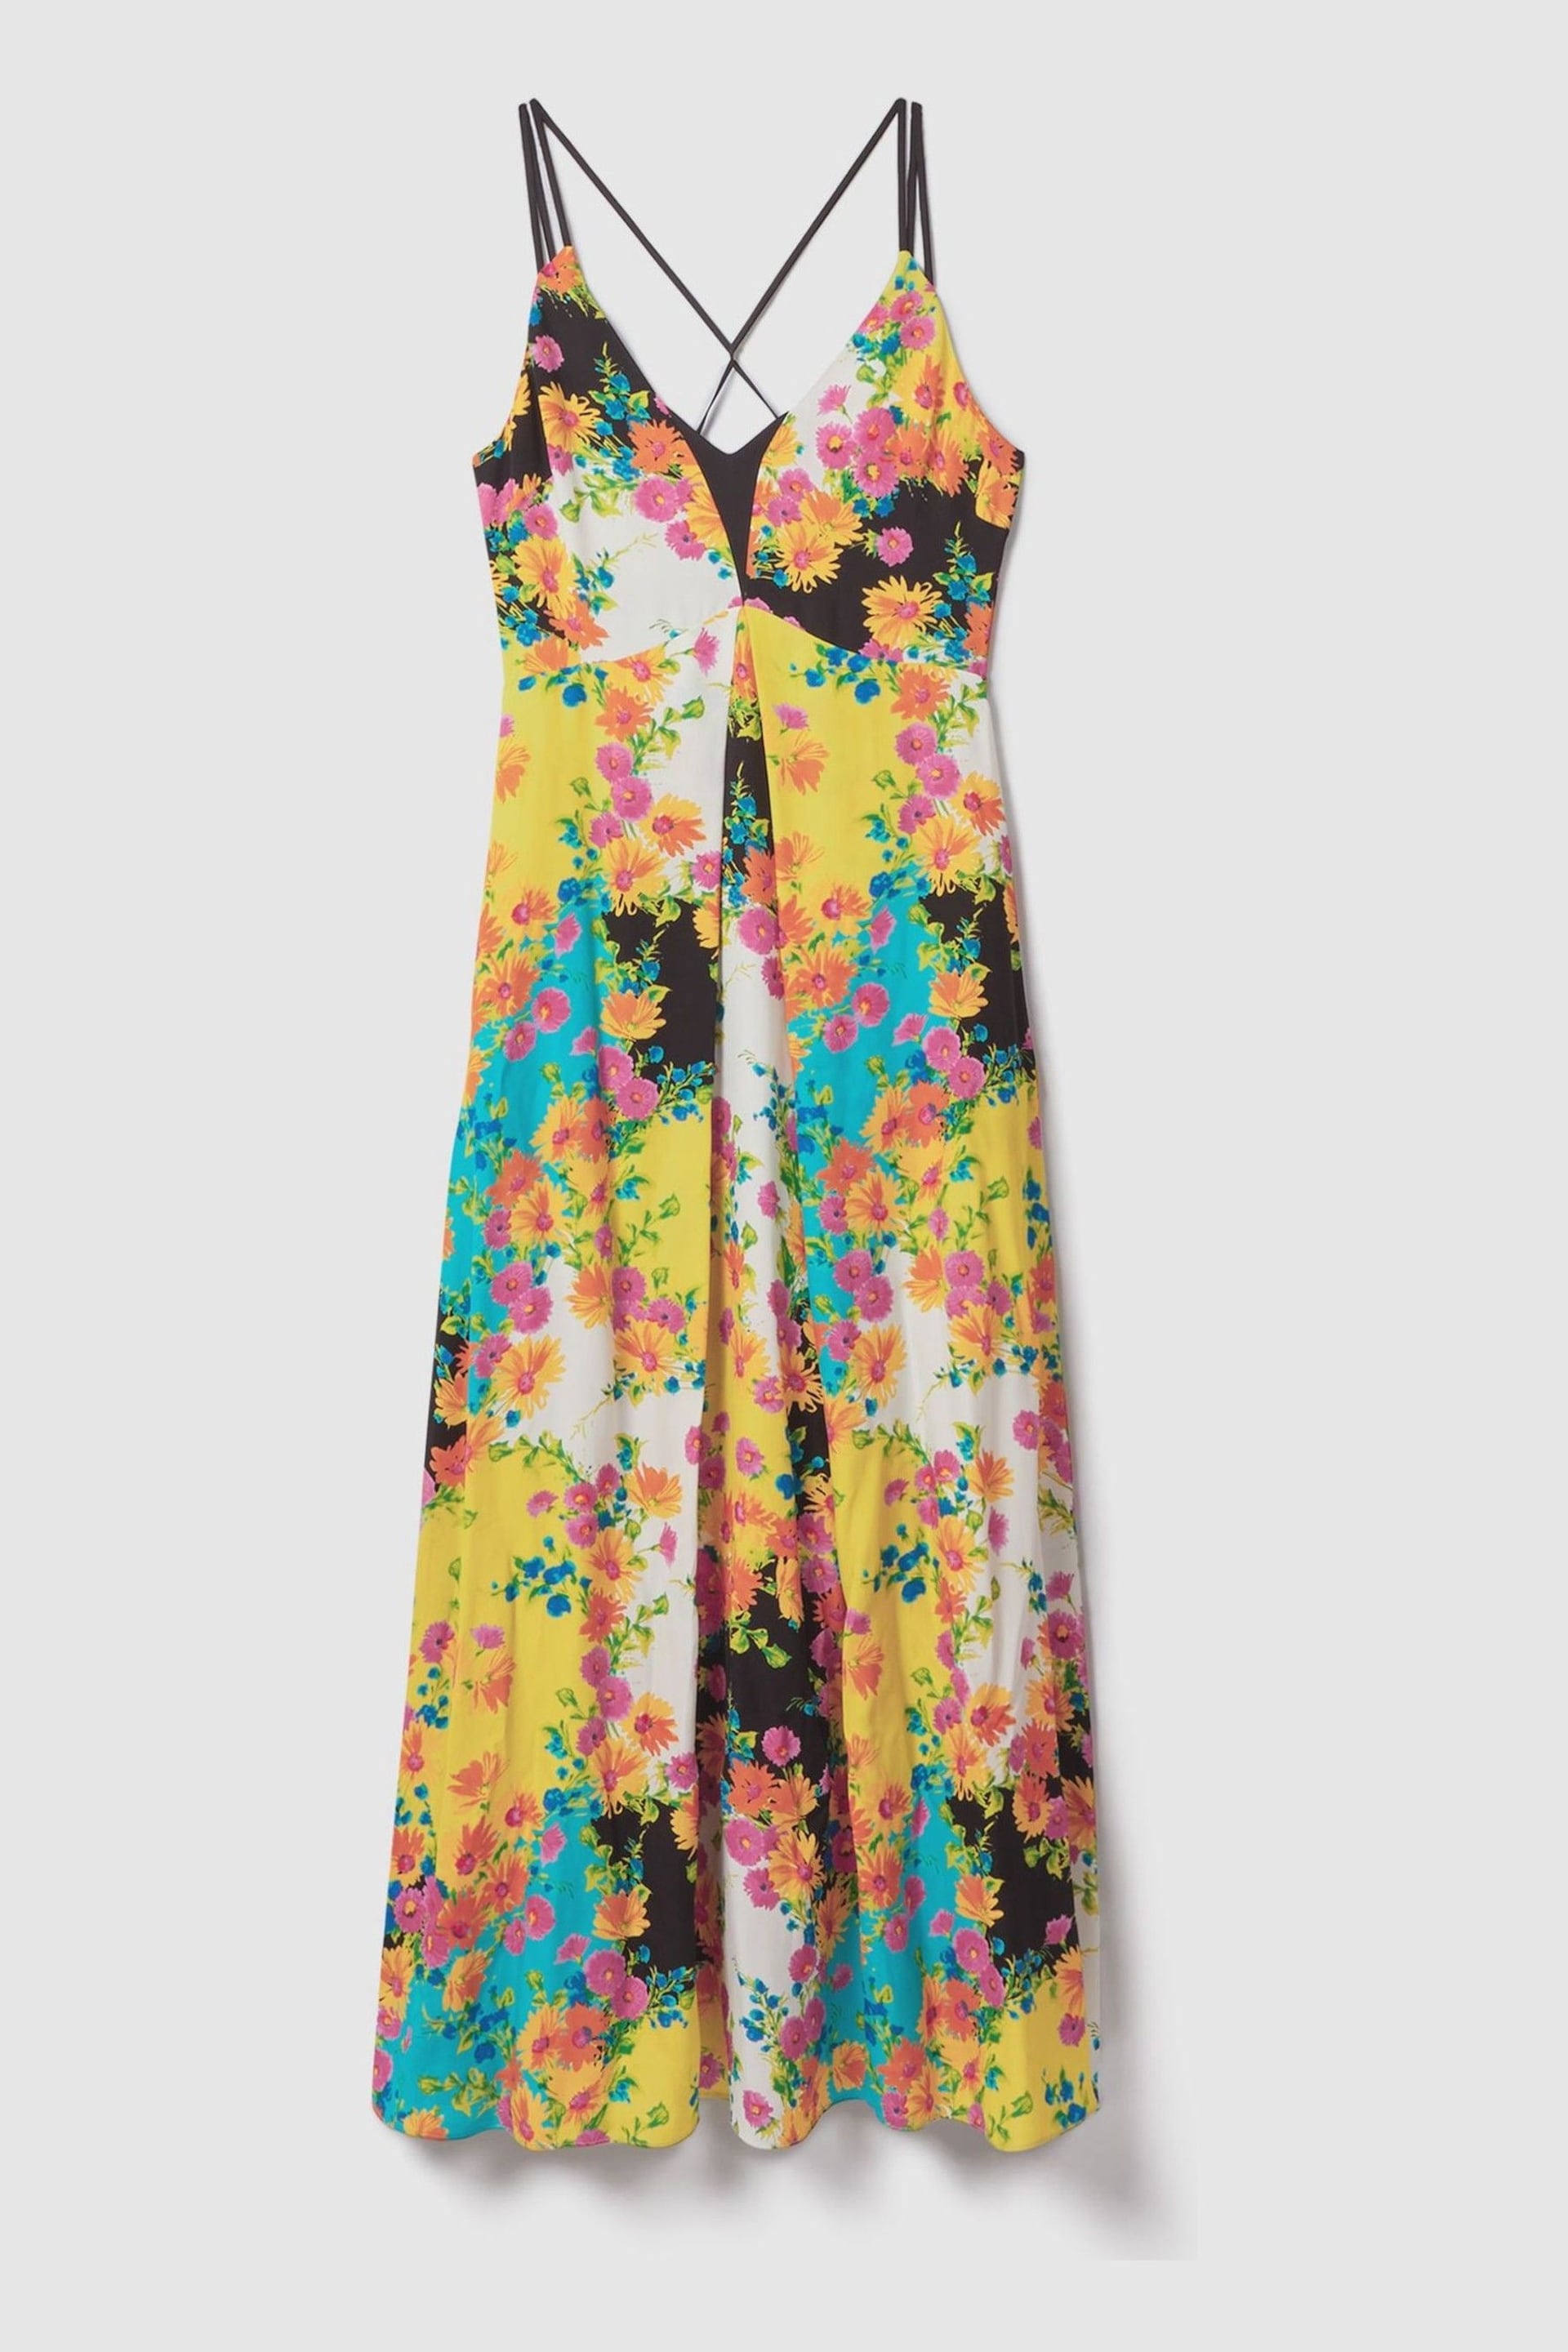 Florere Printed Dual Strap Maxi Dress - Image 2 of 6